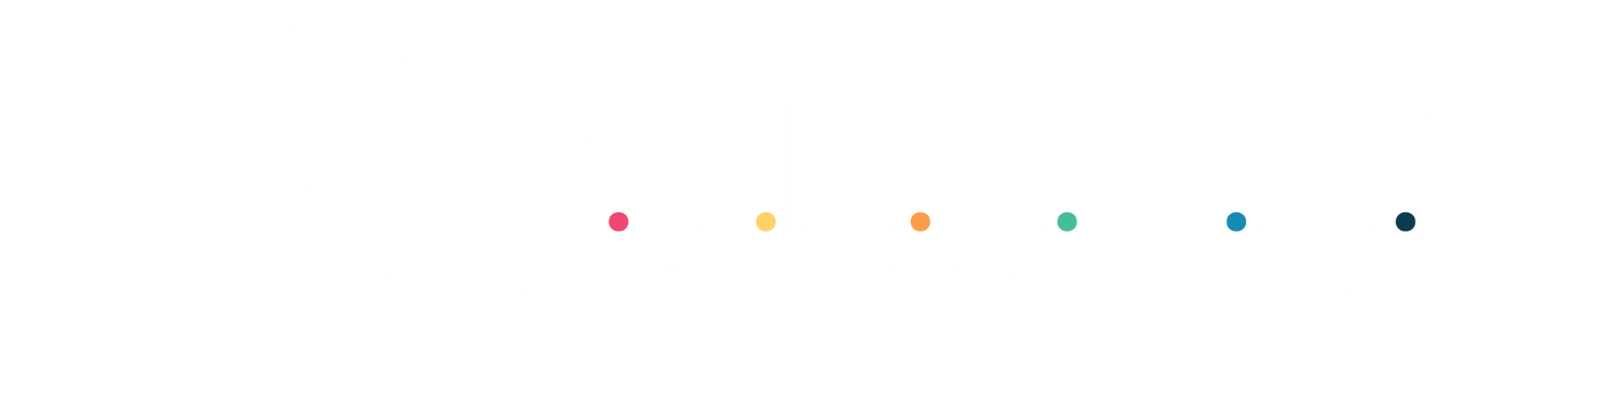 STREAM GLOBAL INNOVATIONS logo